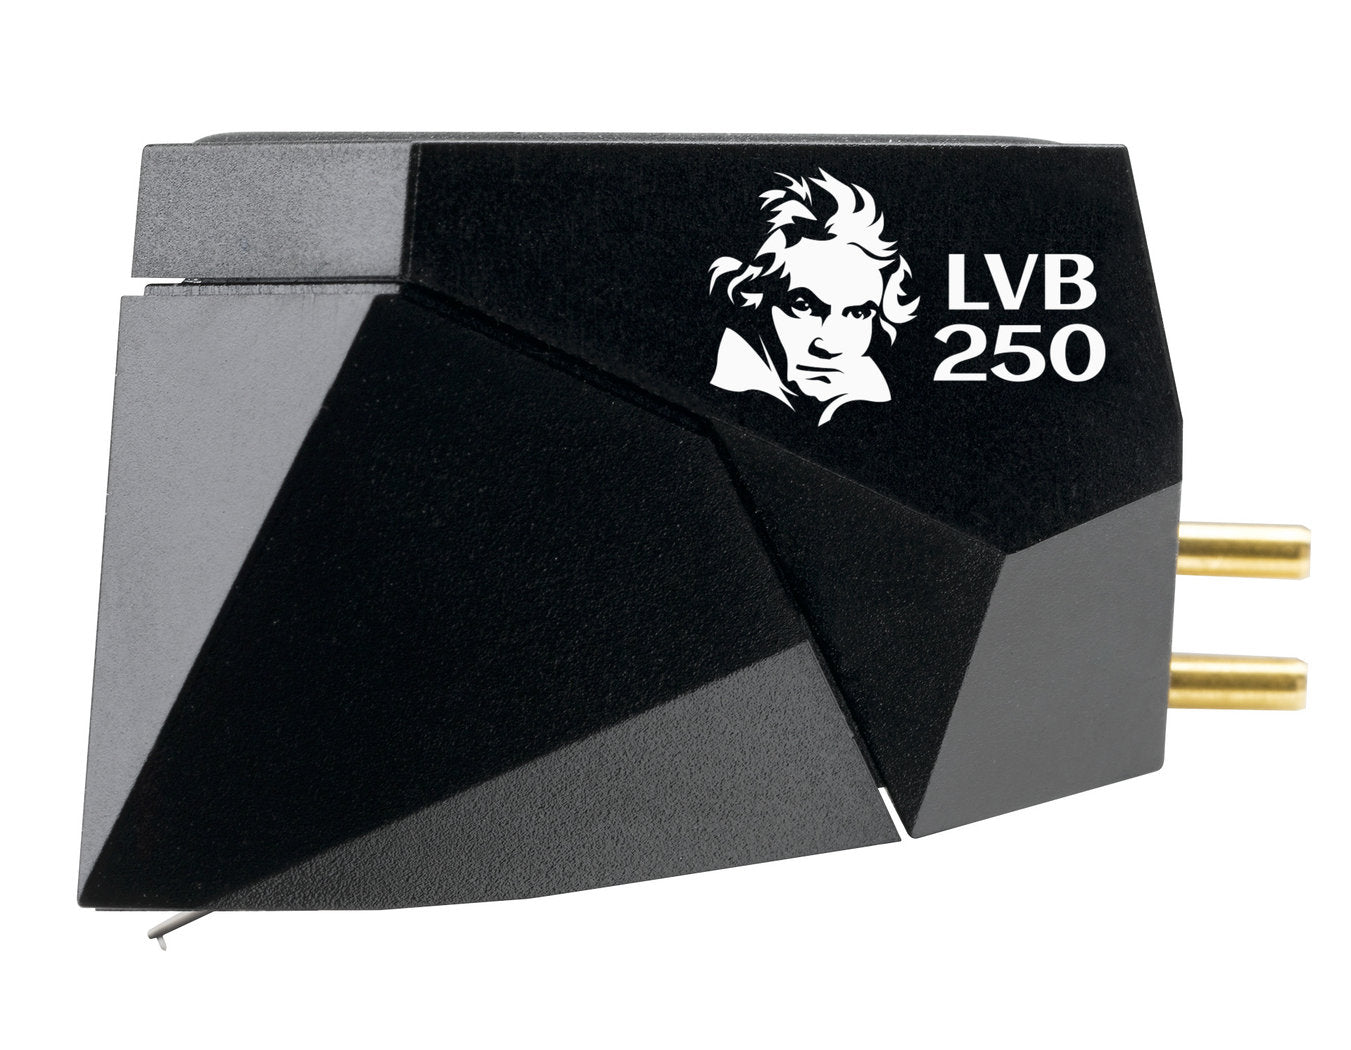 Ortofon Stylus 2M Black LVB 250 sound box